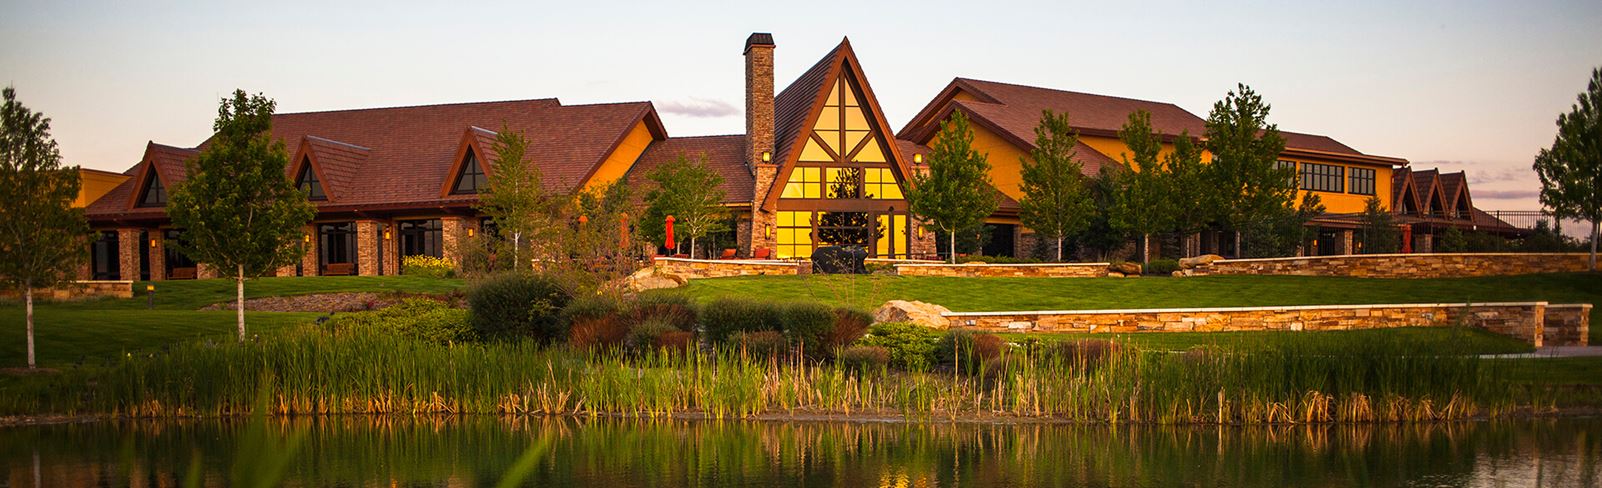 Aspen Lodge 55 plus community center in Broomfield Colorado